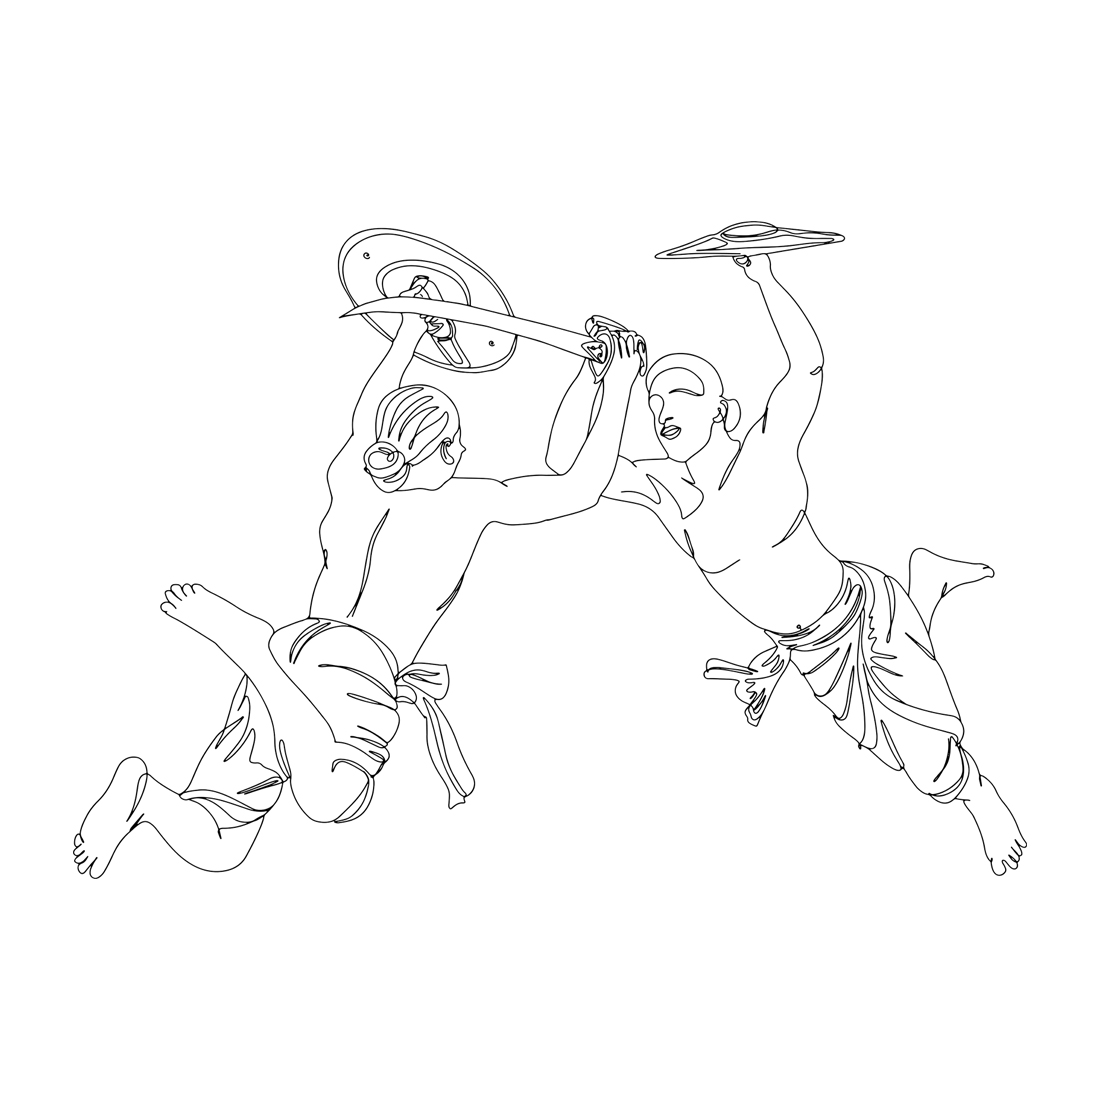 Dynamic Kalarippayat Warriors: One-Line Illustration of Ancient Combat, Tradition Meets Art: Kalarippayat Swordfight in Indian Martial Arts, Kalarippayat Swordfight Sketch cover image.